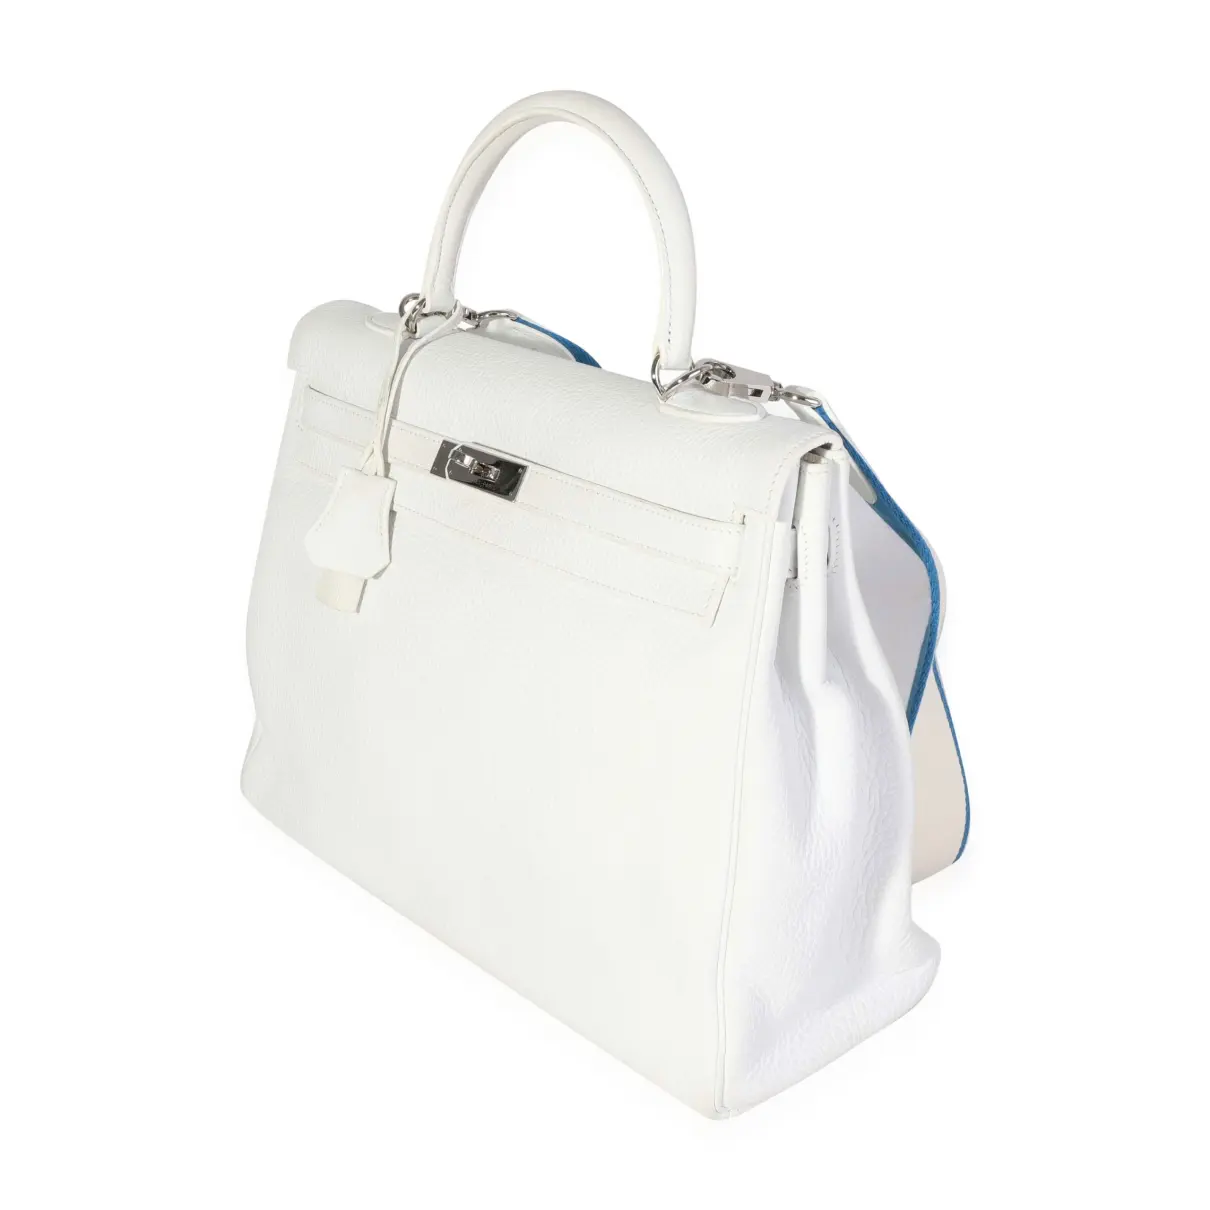 Buy Hermès Leather handbag online